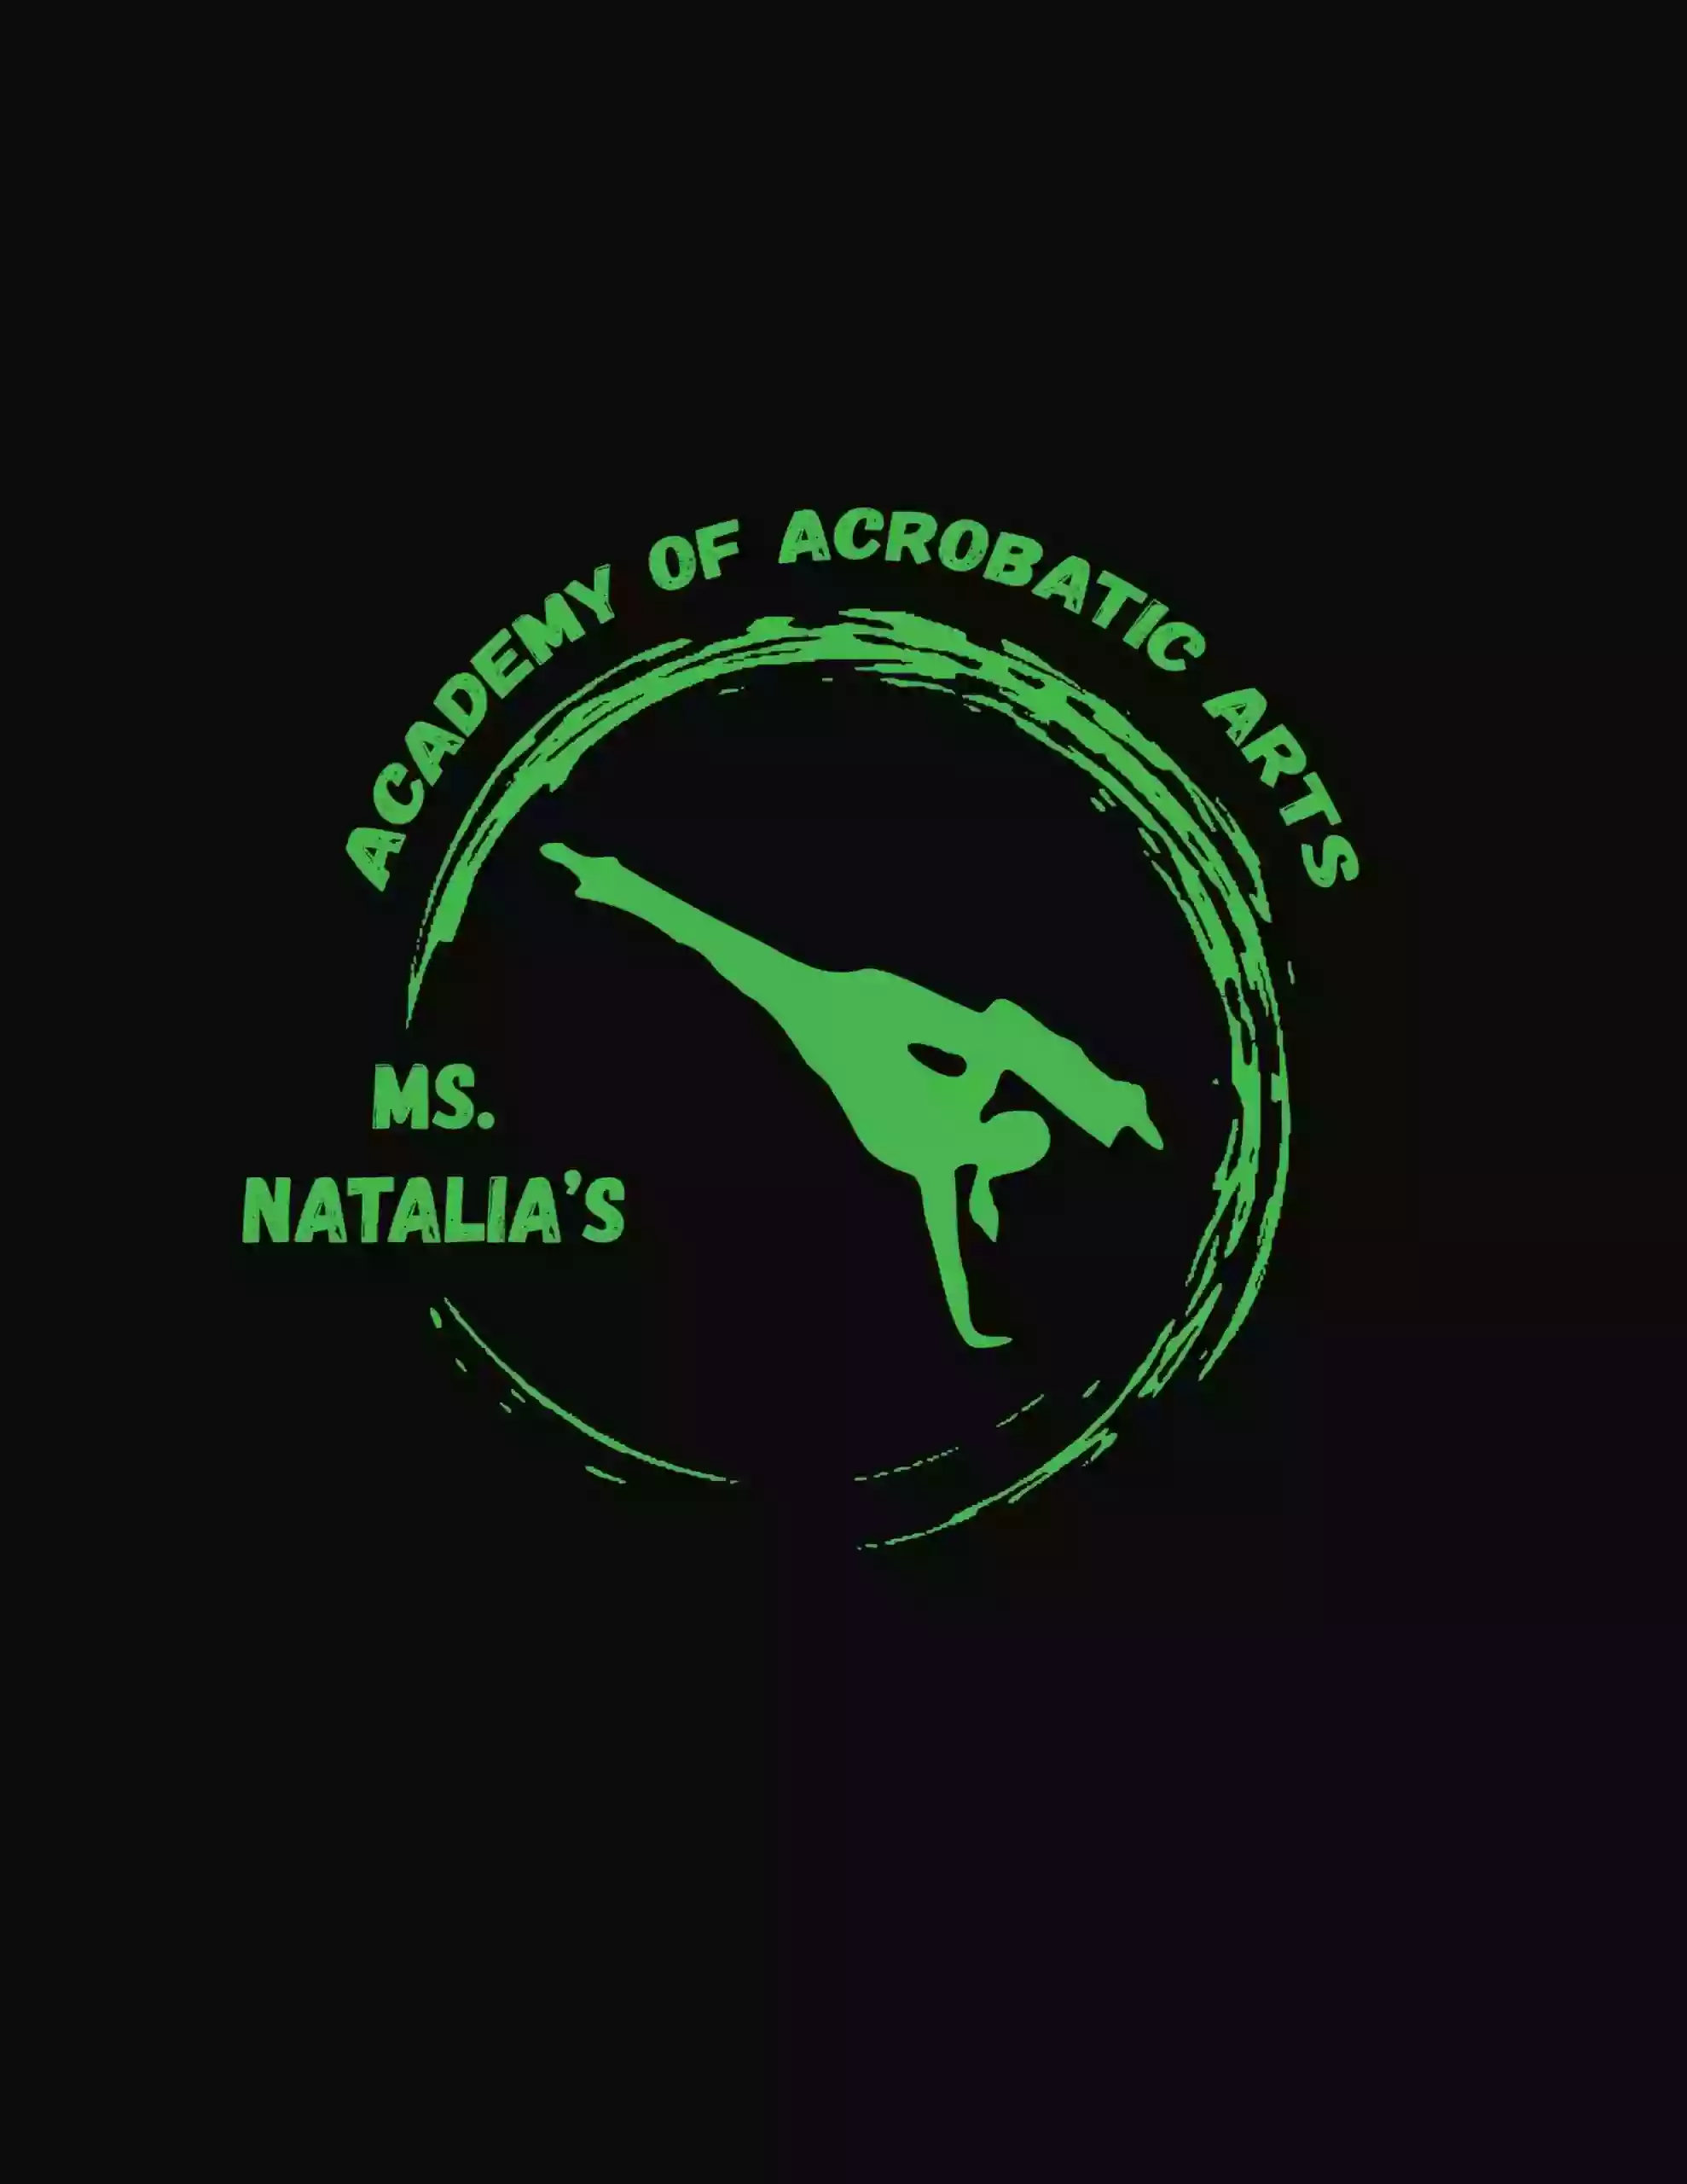 Ms. Natalia's Academy Of Acrobatic arts